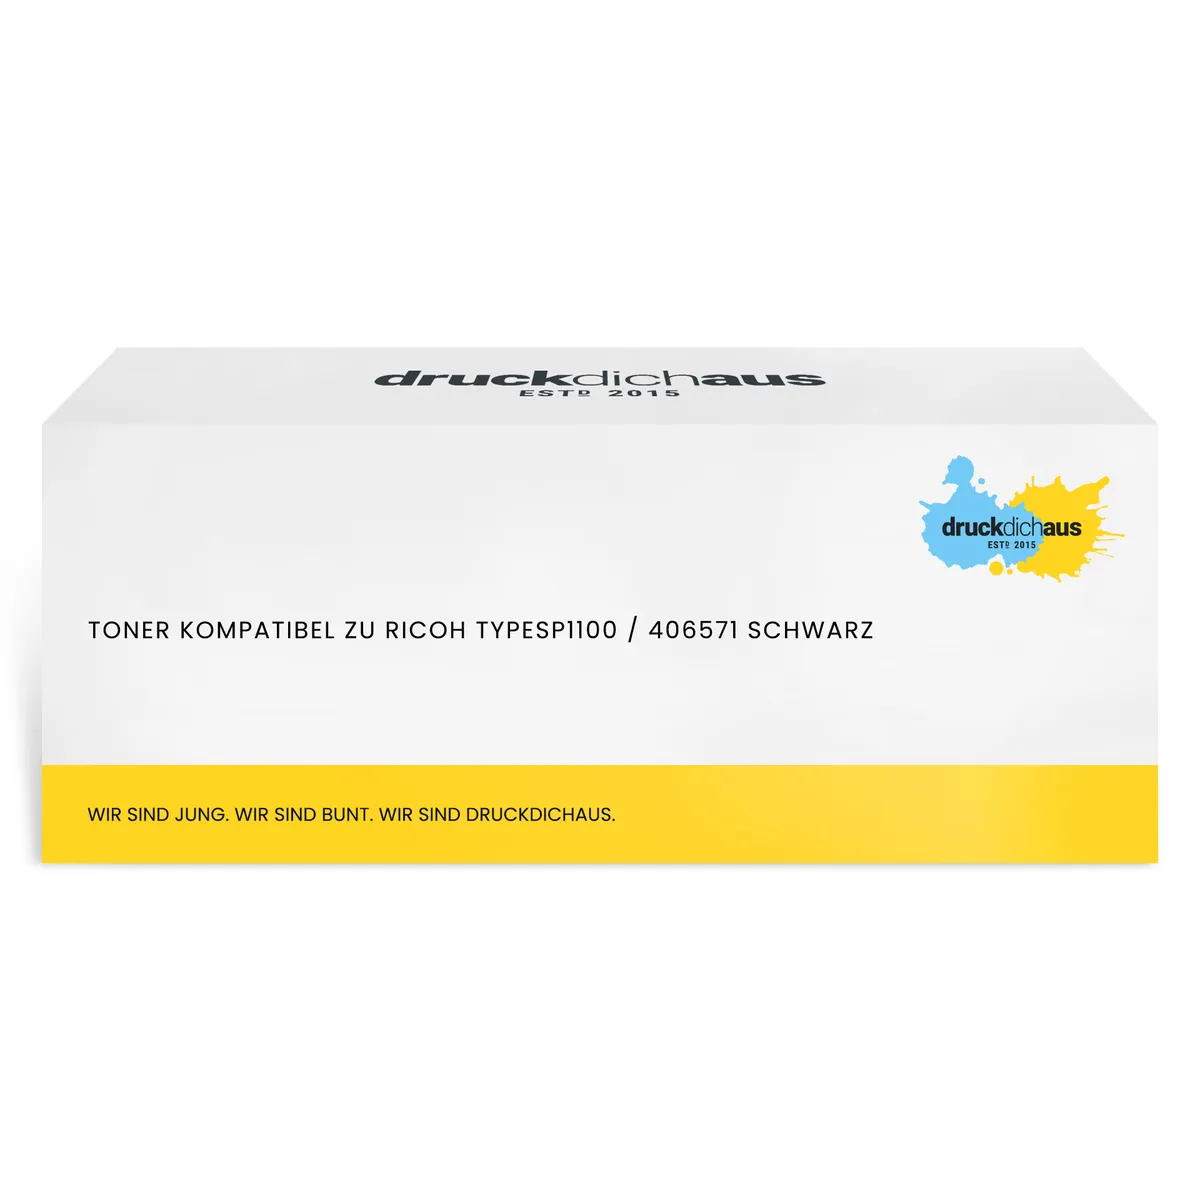 Toner kompatibel zu Ricoh TYPESP1100 / 406571 schwarz